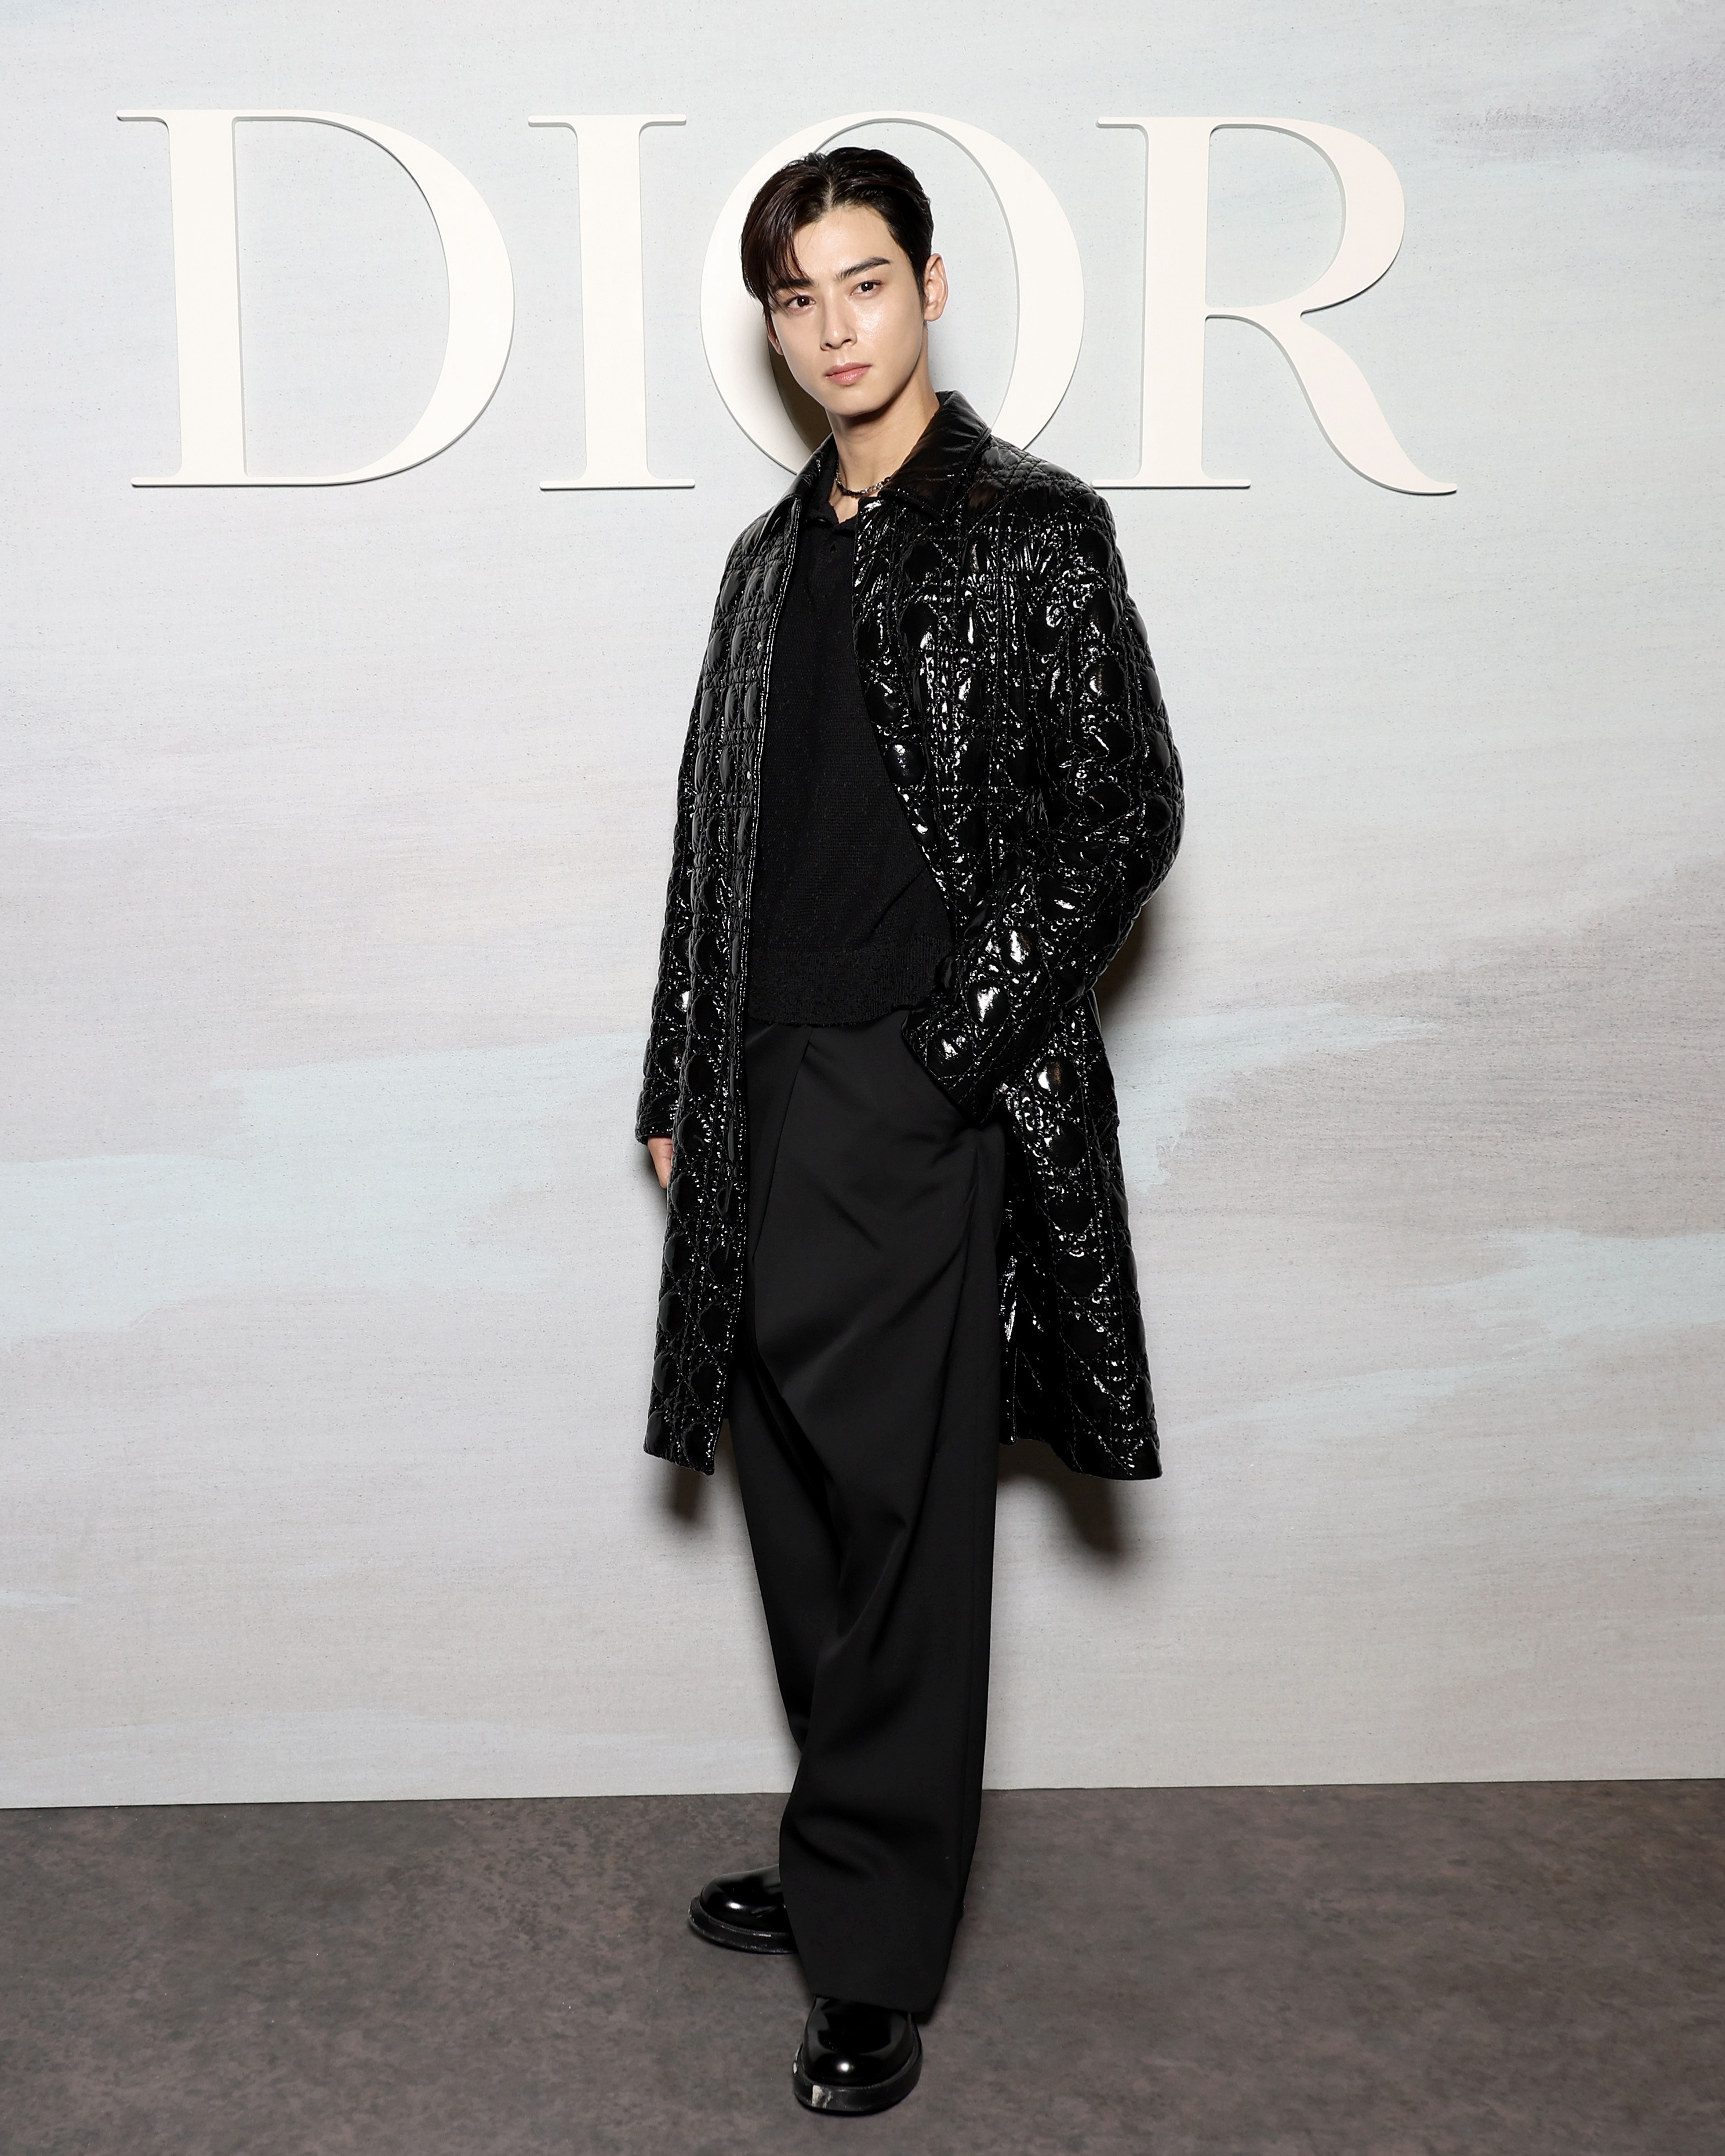 Dior on X: Cutting a dashing figure in black, Dior Beauty